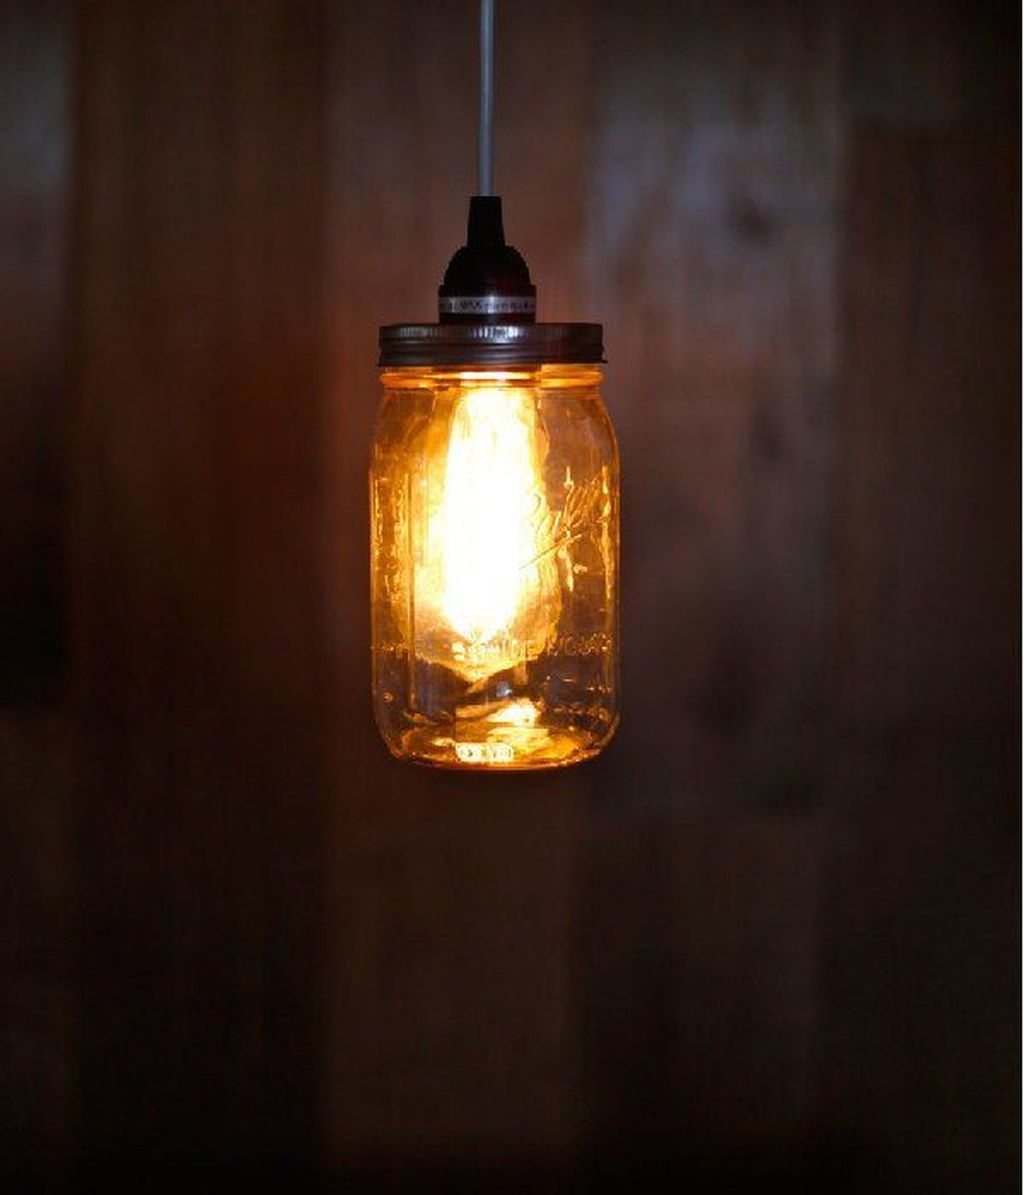 Awesome Diy Mason Jar Lights To Make Your Home Look Beautiful25